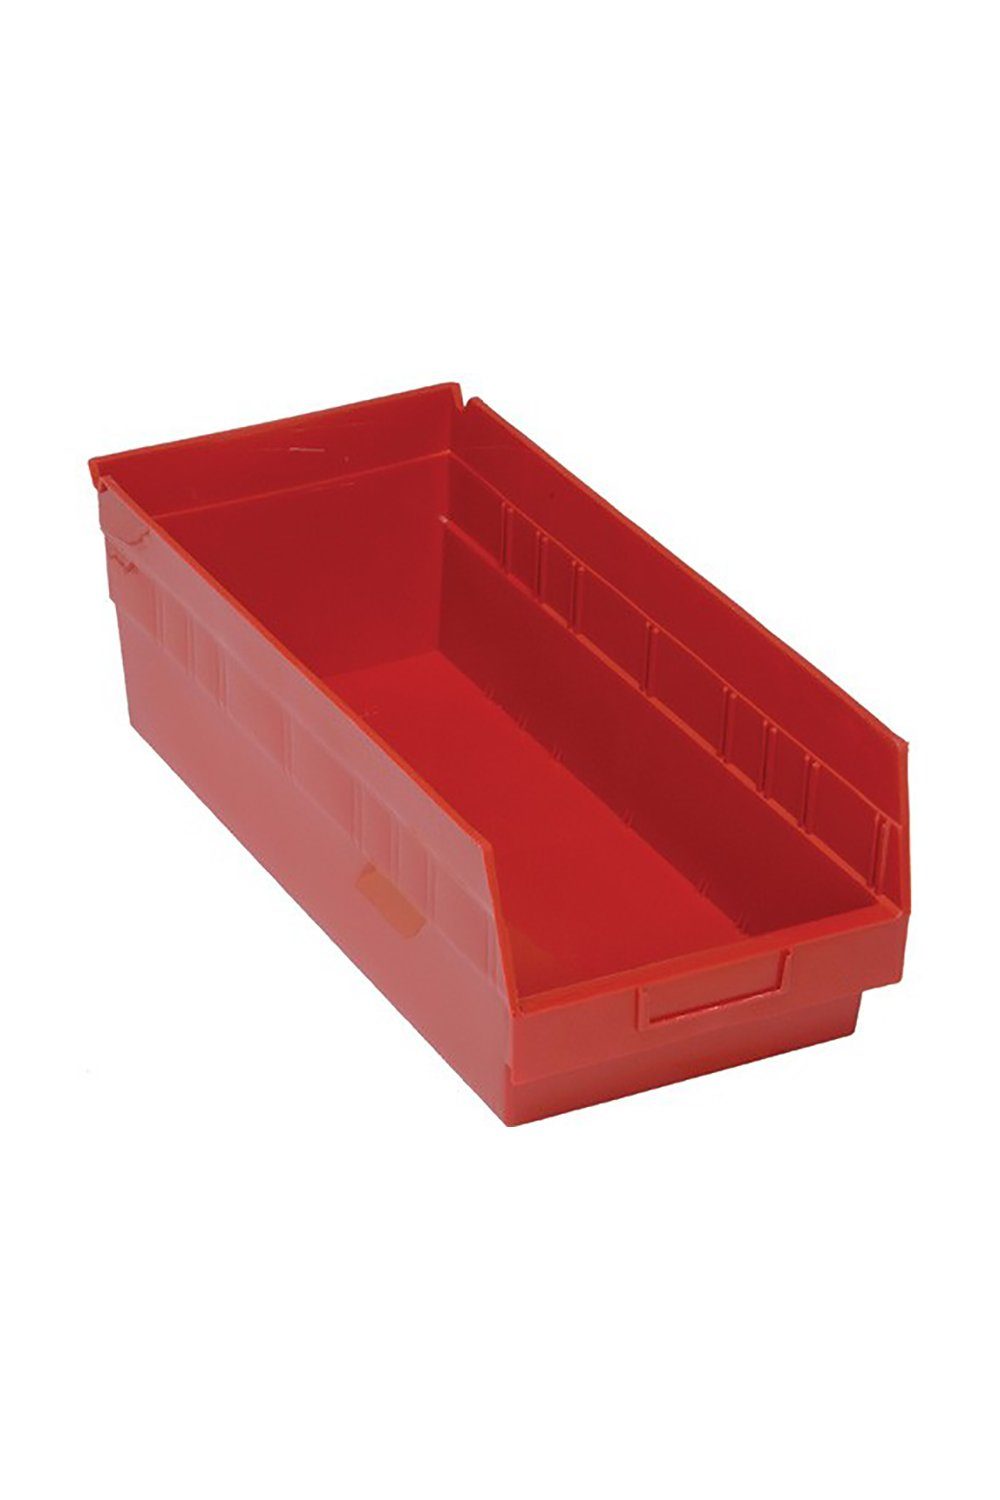 Shelf Bin for 24"D Shelves Bins & Containers Acart 17-7/8'' x 8-3/8'' x 6'' Red 